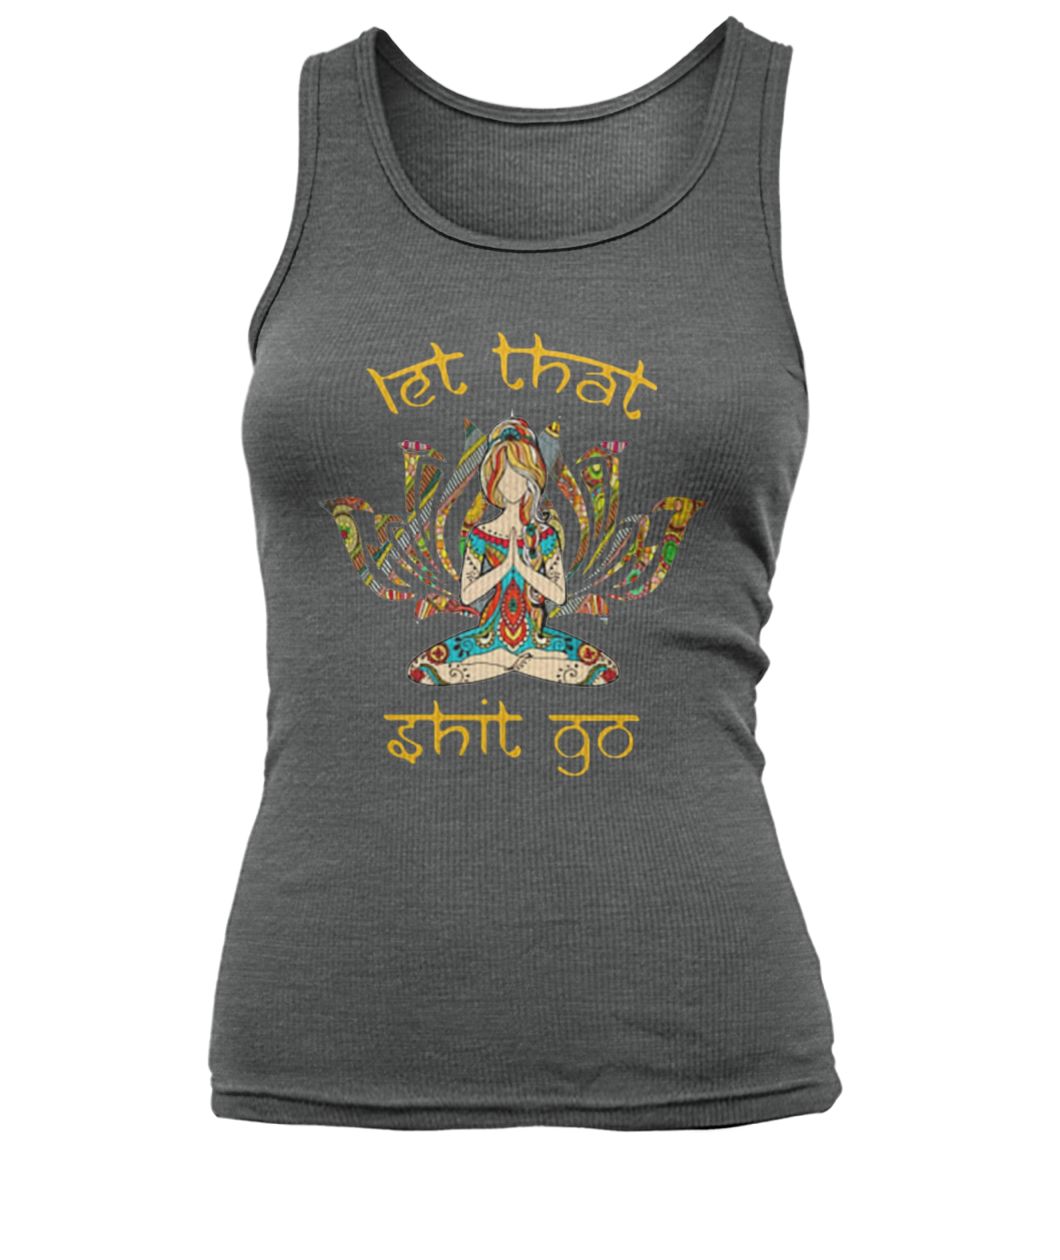 Hippie girl yoga let that shit go women's tank top